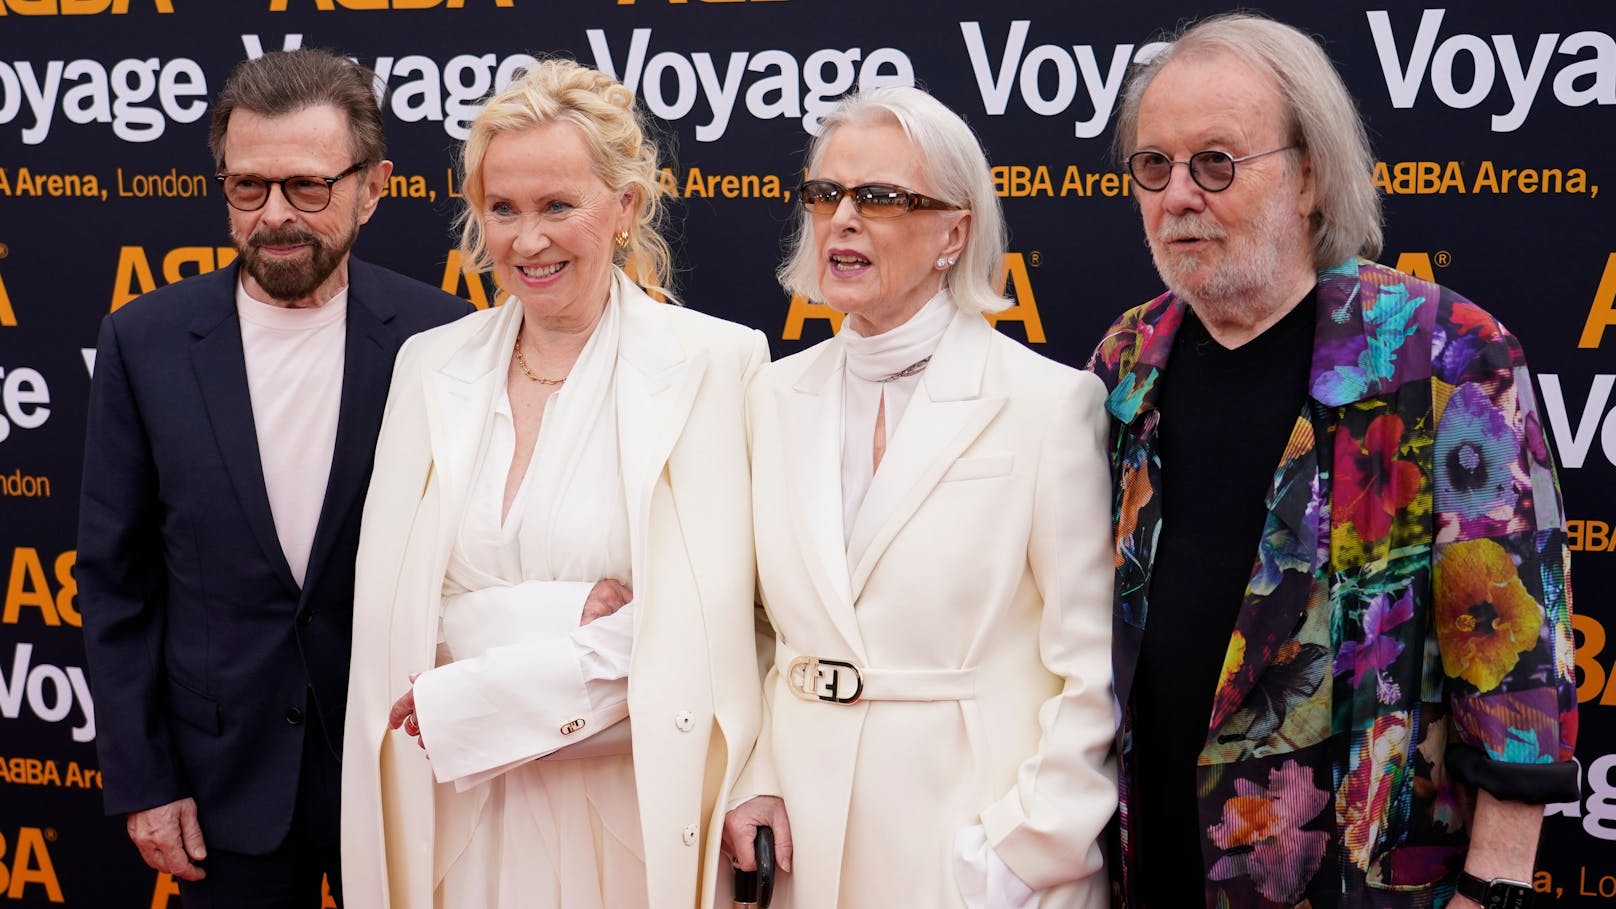 <strong>ABBA</strong> feierten 2022 ein Comeback: Bjorn Ulvaeus, Agnetha Faltskog, Anni-Frid Lyngstad und Benny Andersson